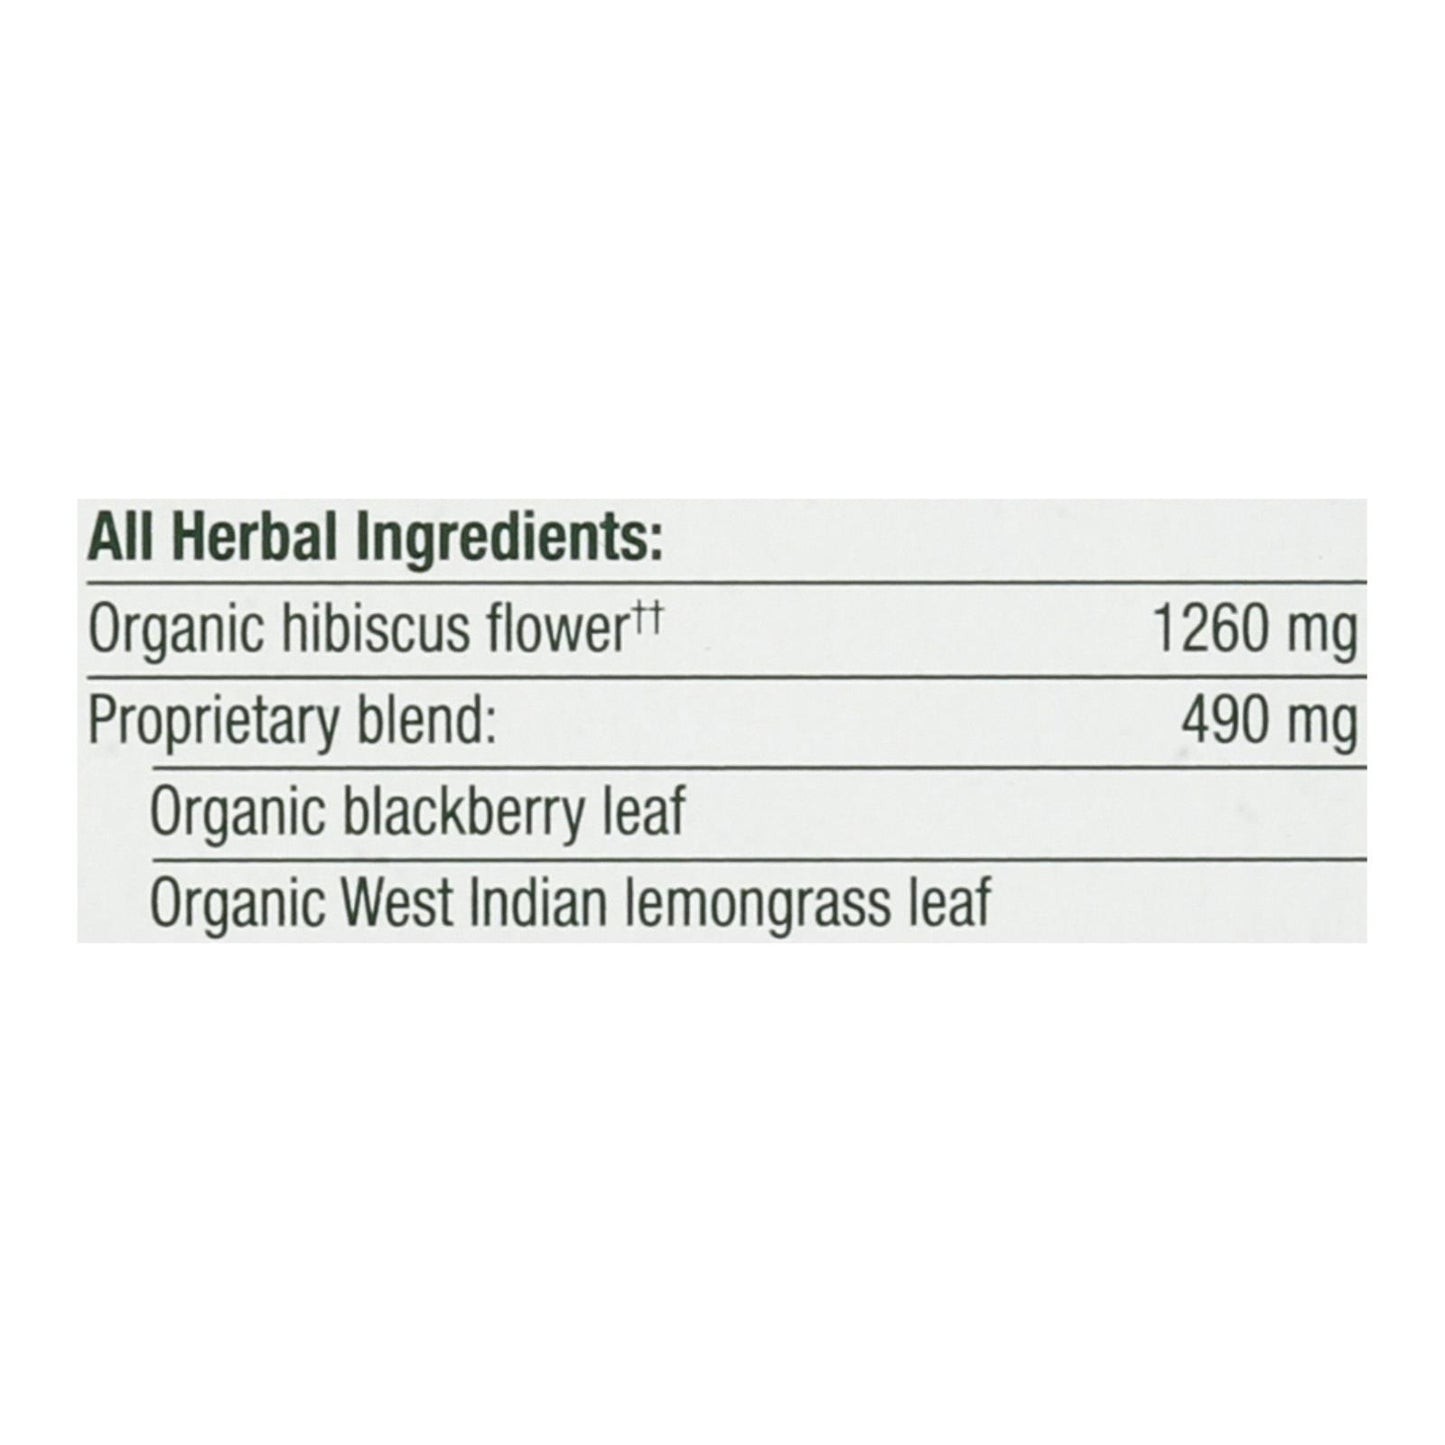 
                  
                    Traditional Medicinals Organic Herbal Tea - Hibiscus - Case Of 6 - 16 Bags
                  
                